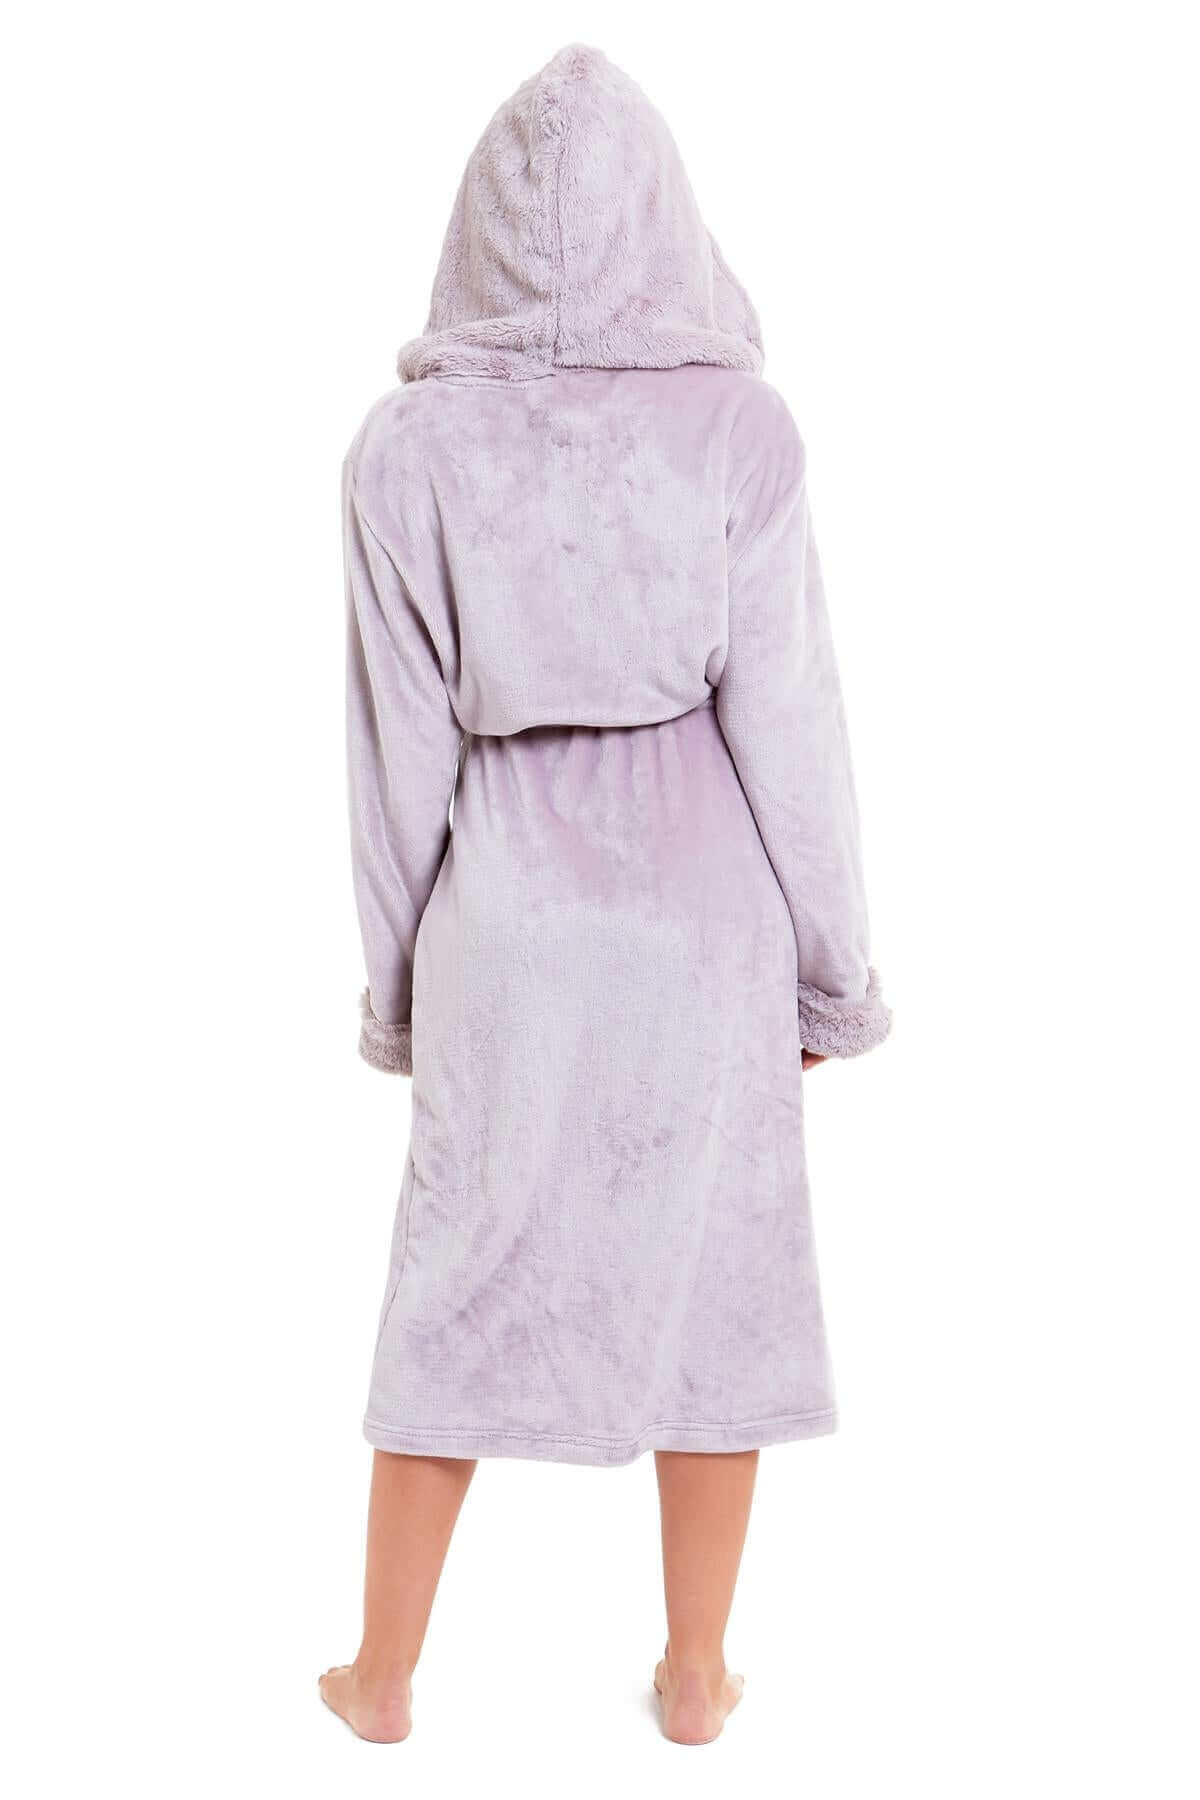 Women's Faux Fur Hooded Robe Dressing Gown, Super Soft Bath Robe. Buy now for £20.00. A Robe by Daisy Dreamer. bath robe, bathrobe, blush pink, clothing, comfortable, cosy, daisy dreamer, dressing, dressing gown, dusky pink, faux fur, flannel, fleece, flu